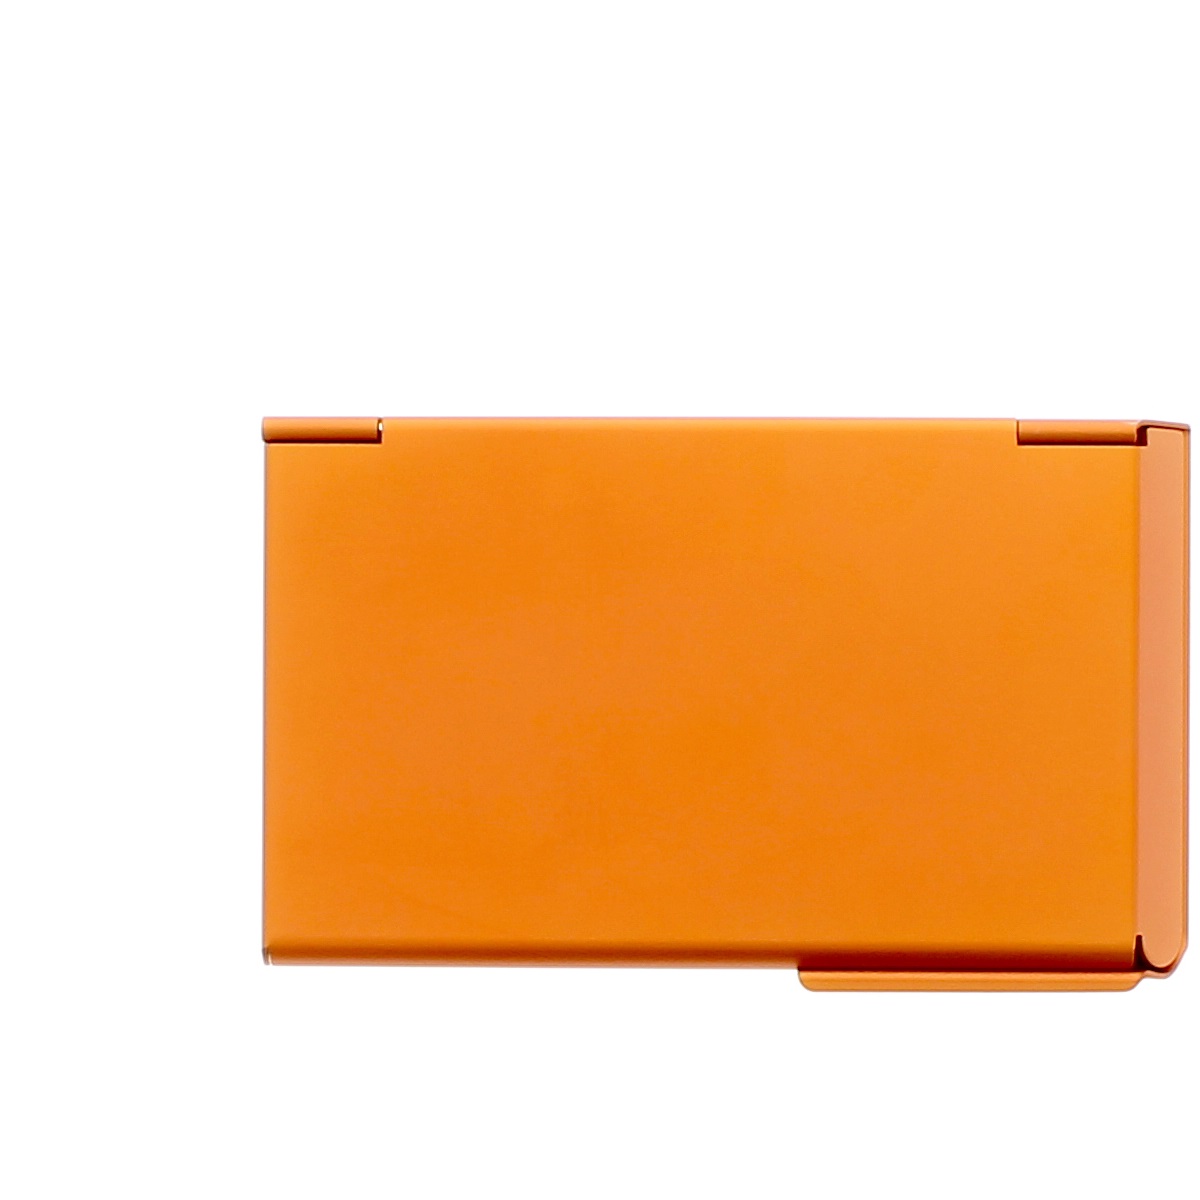 OGON Aluminum Business card holder One Touch - Orange